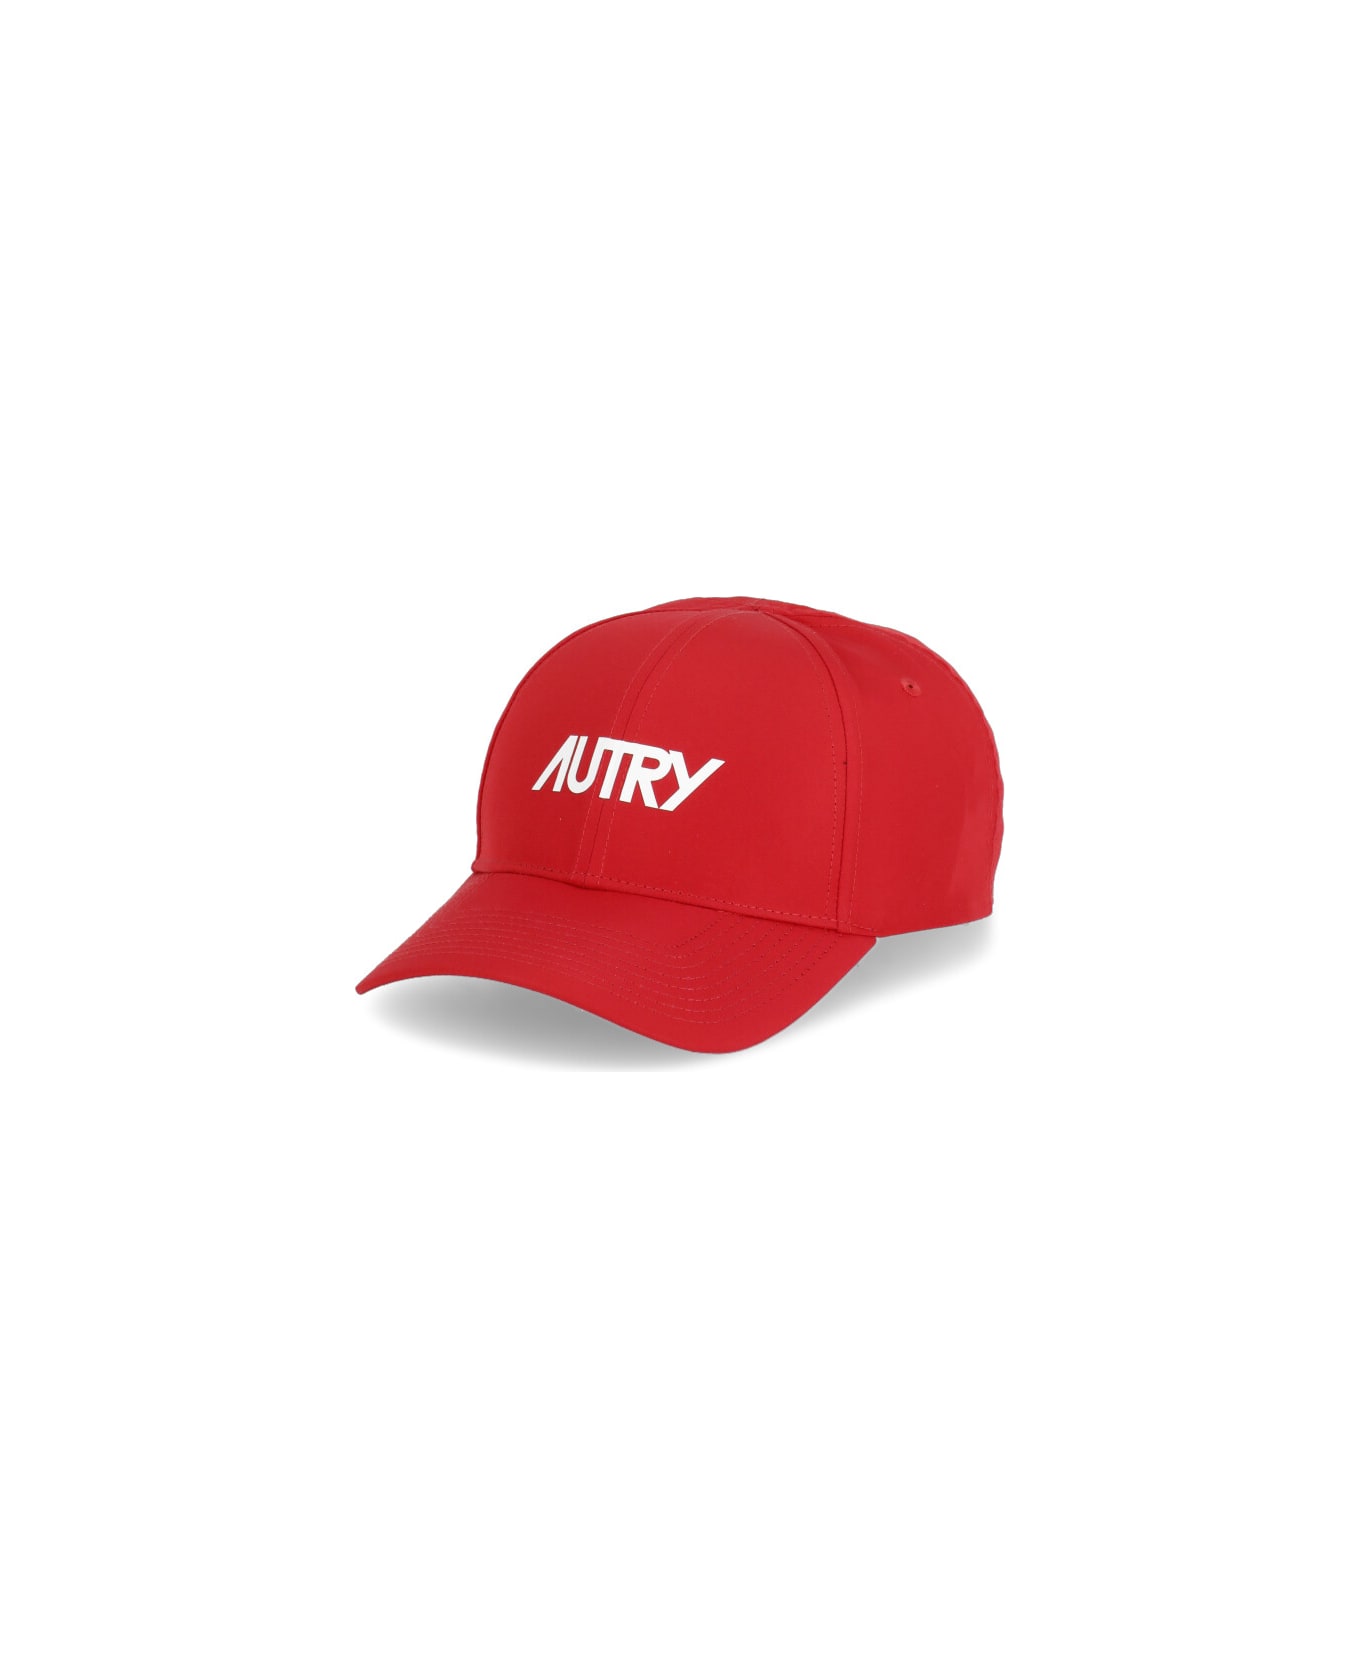 Autry Baseball Hat - Red 帽子